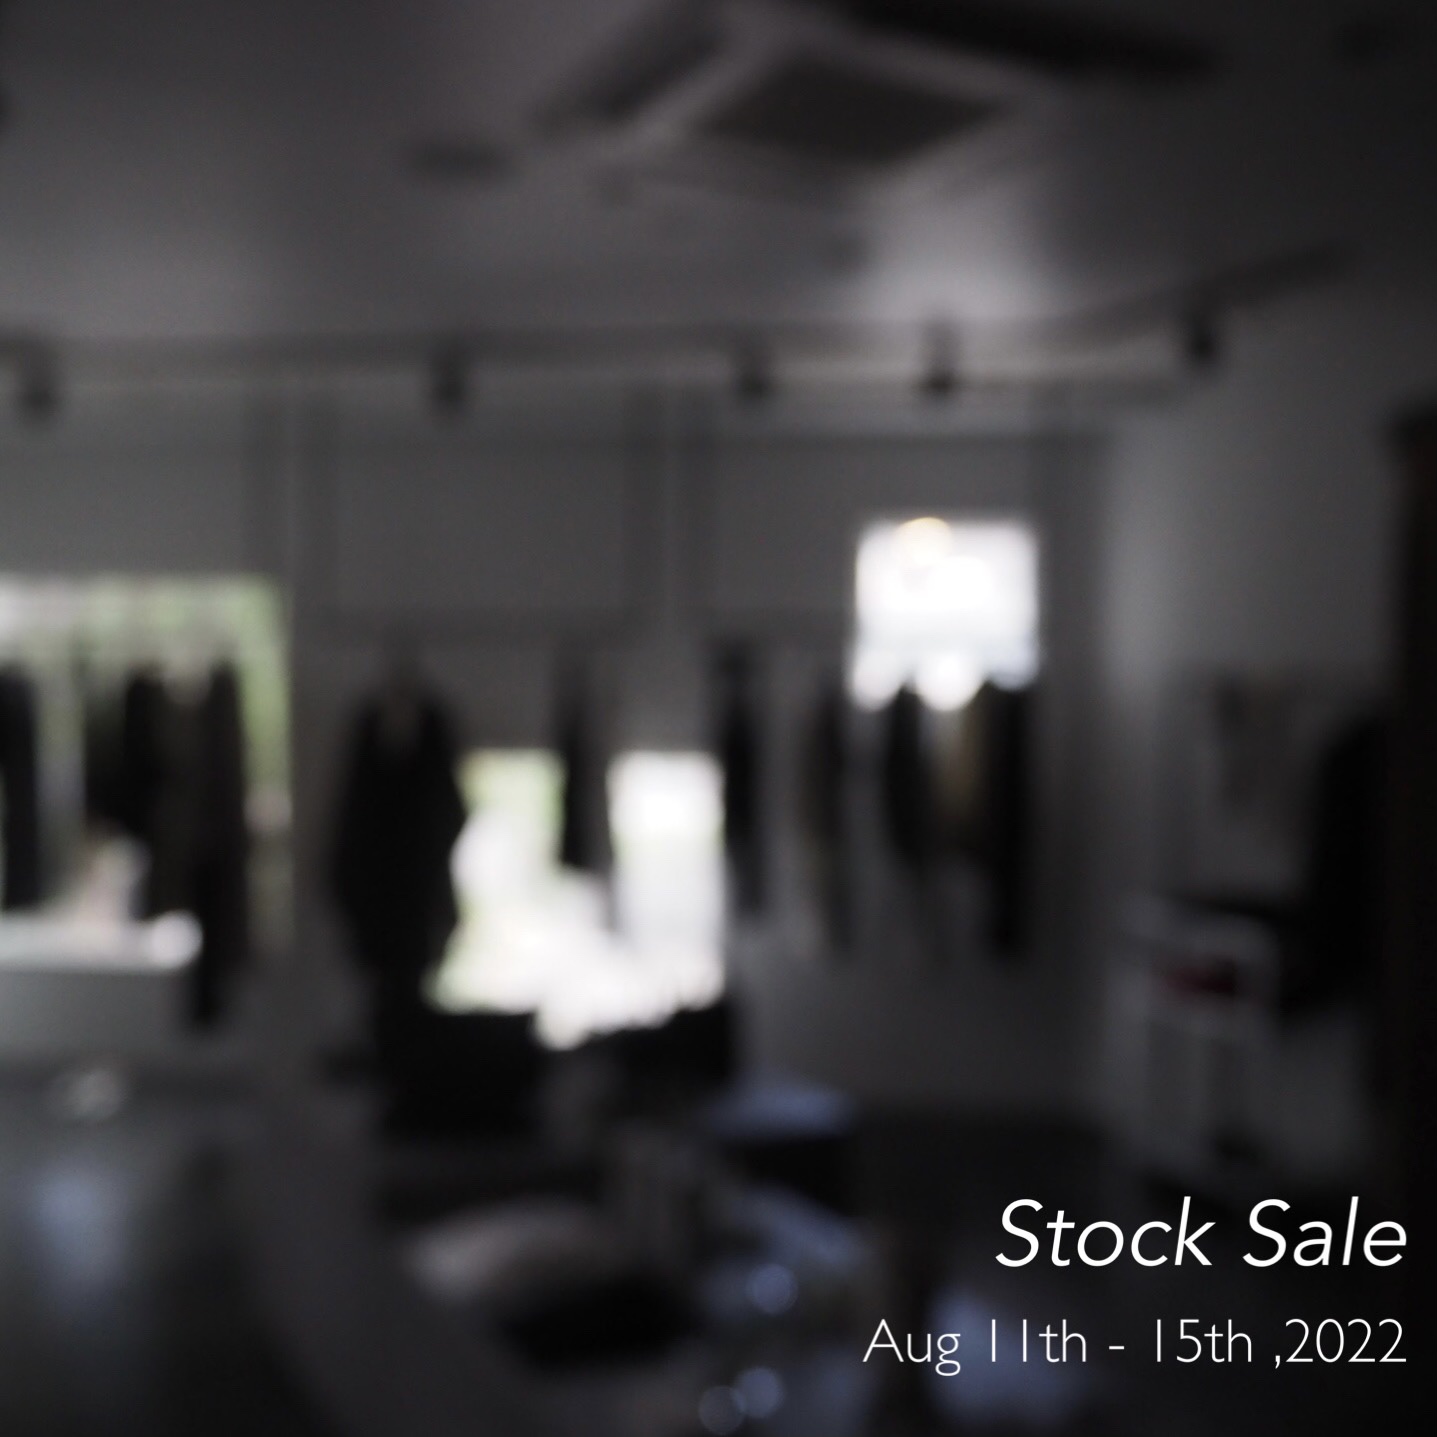 【Stock Sale / 8.11thu - 15mon】